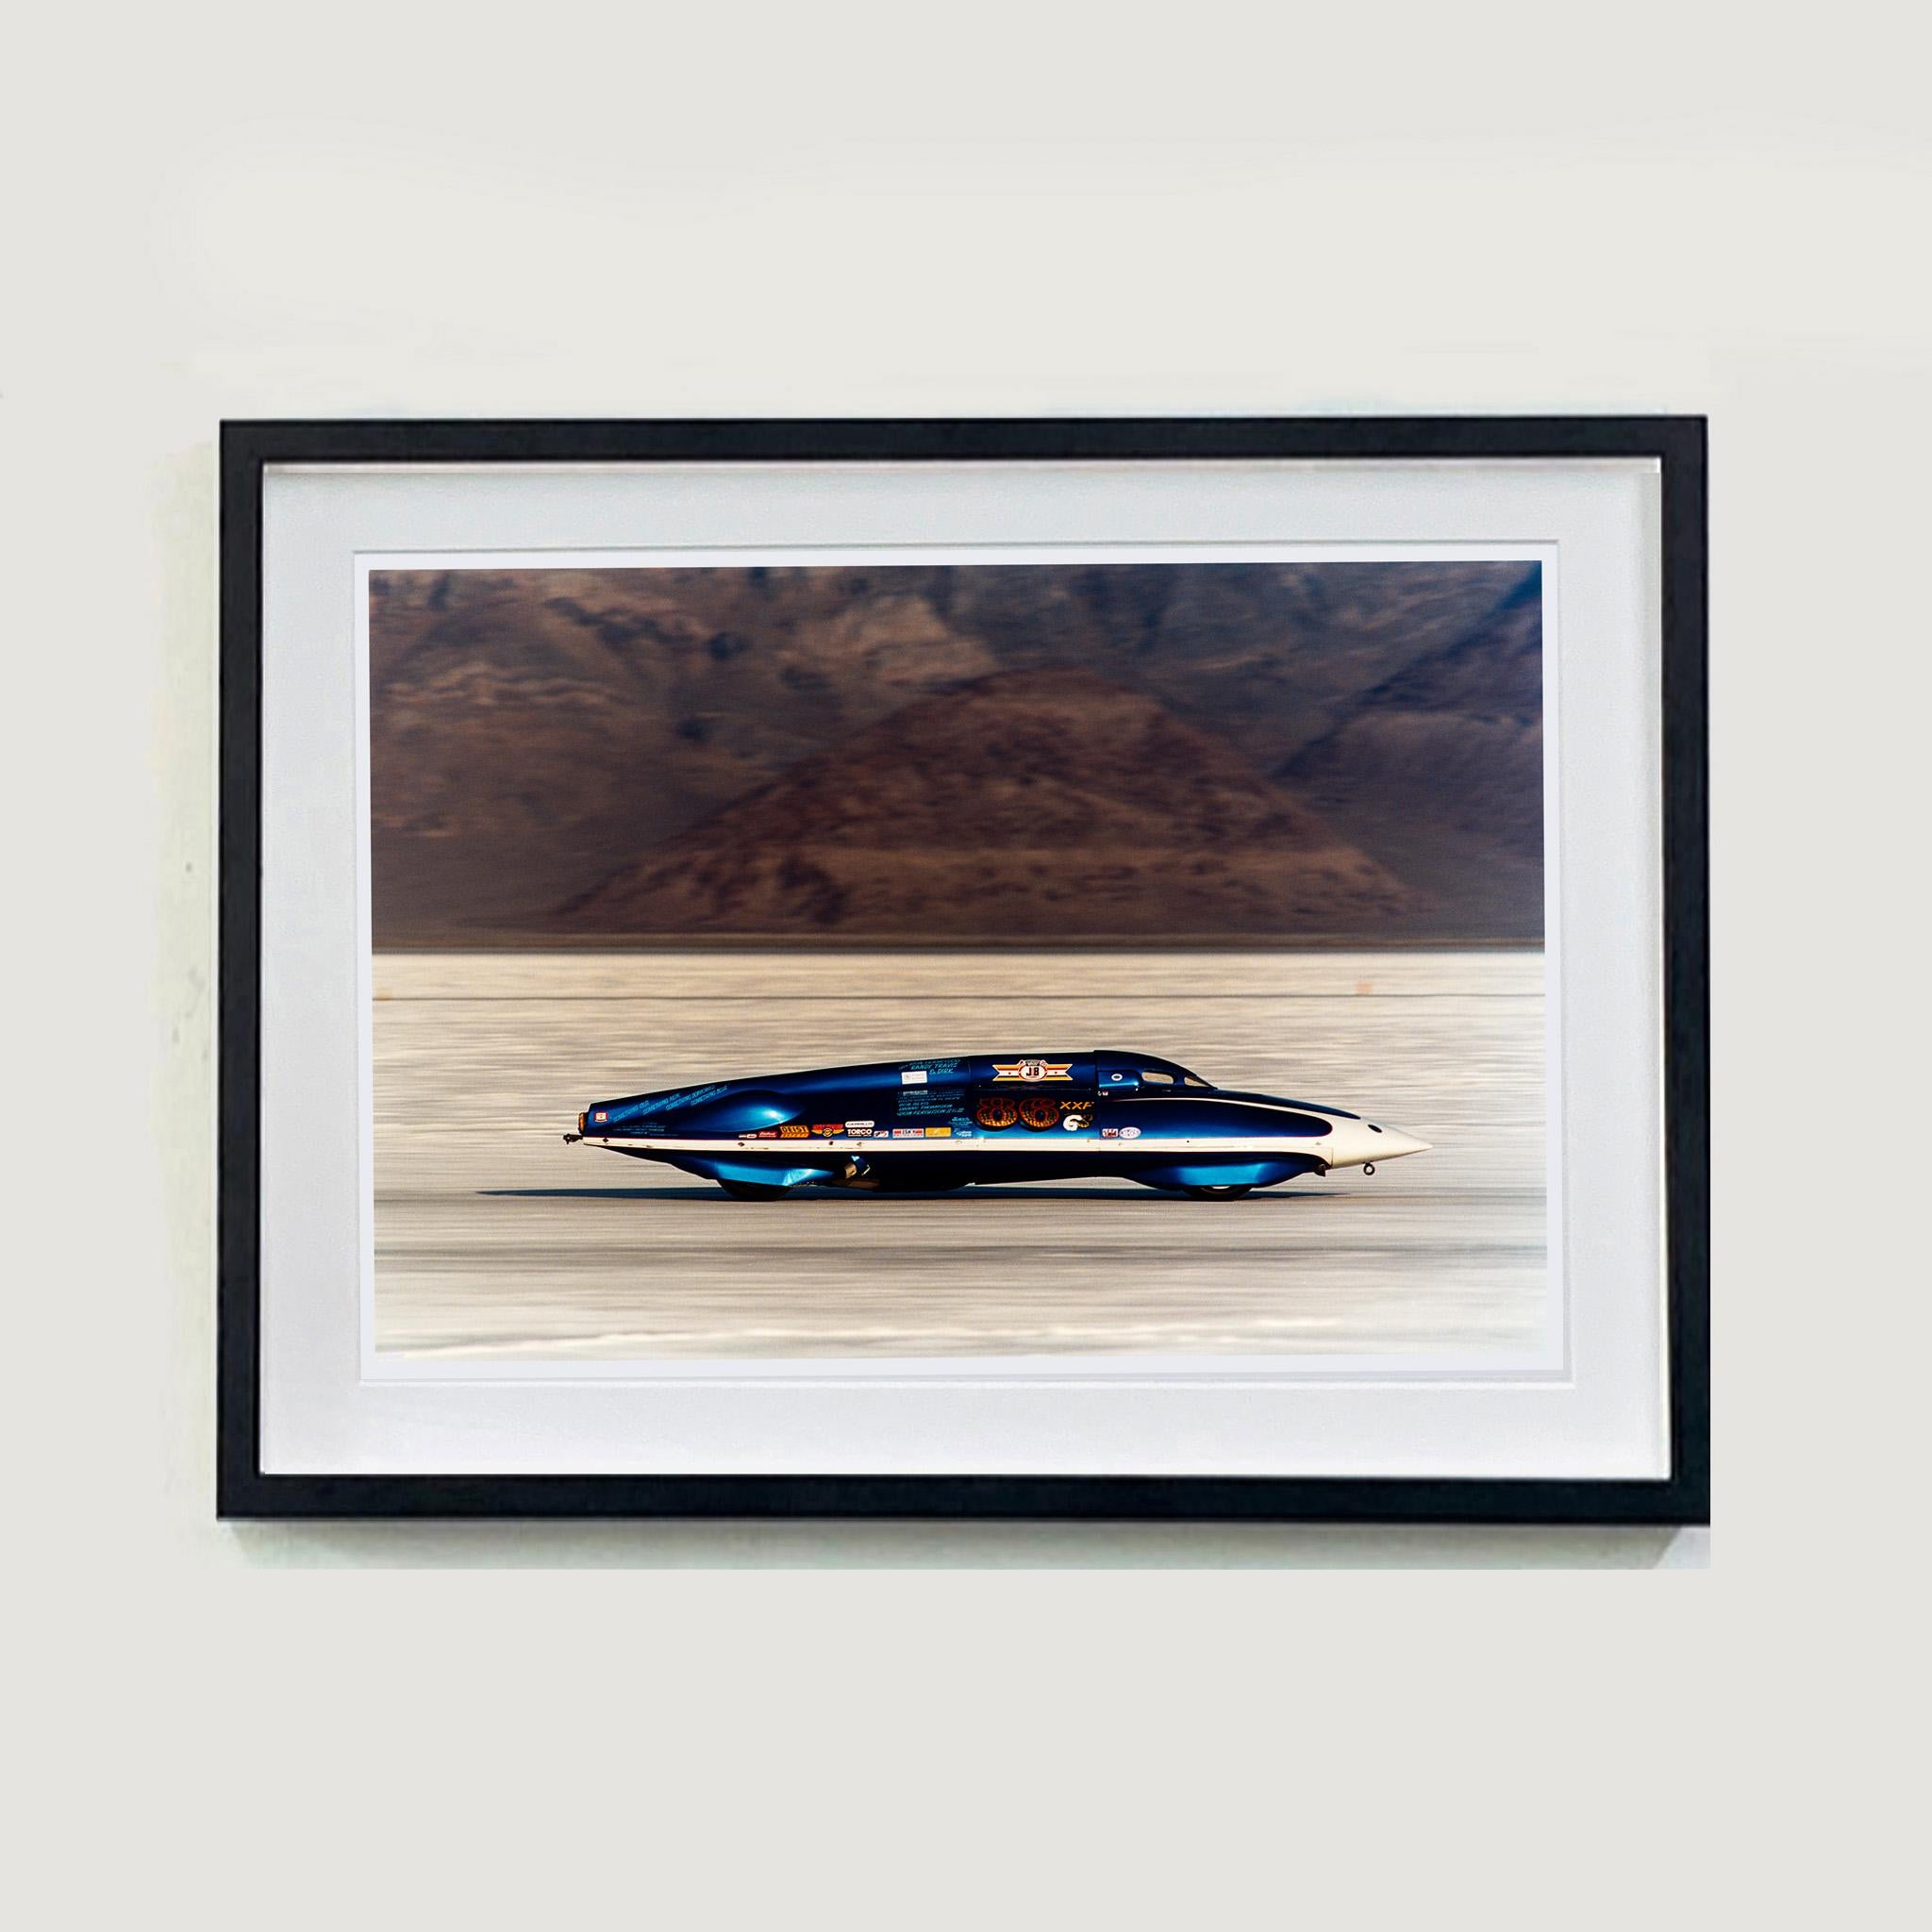 LSR Racing Streamliner, Bonneville, Utah - American Landscape Car Photo - Photograph by Richard Heeps